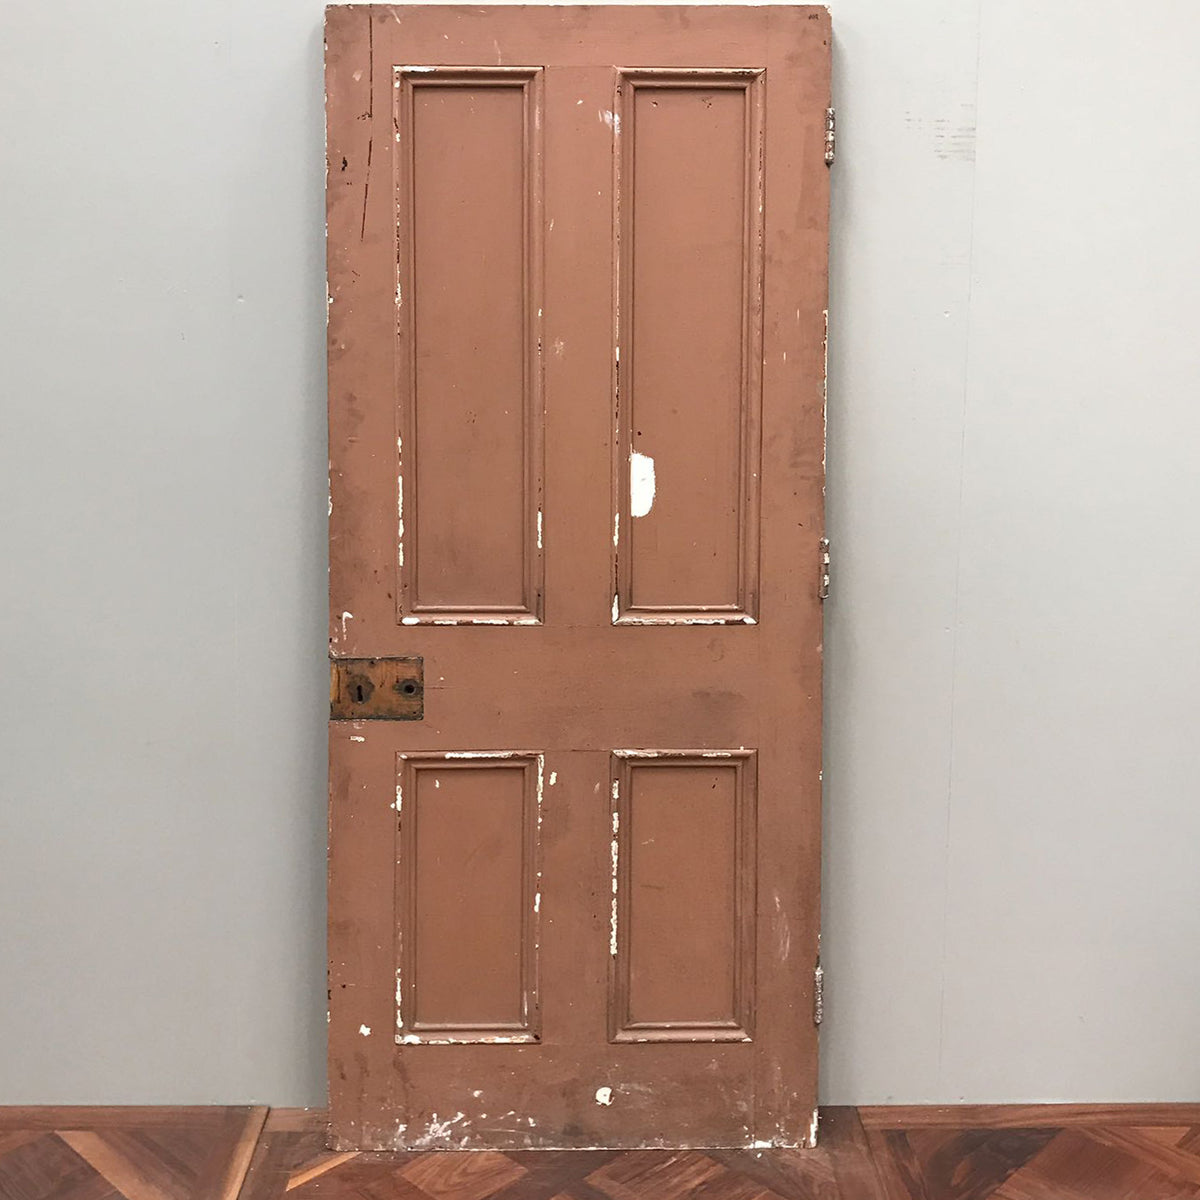 Victorian Four Panel Door - 200cm x 80.5cm x 5cm | The Architectural Forum